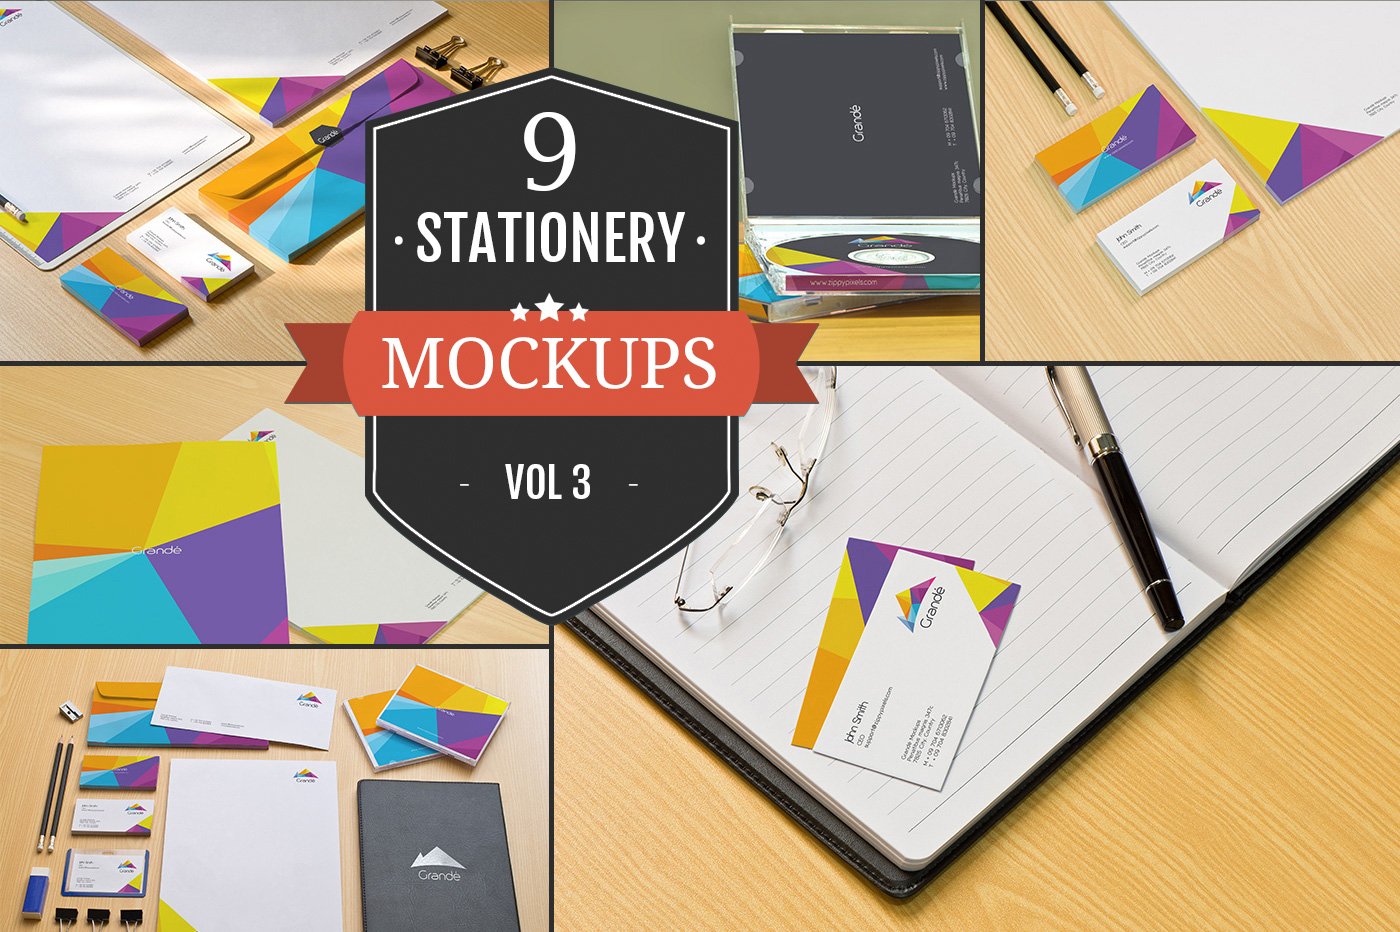 Branding Stationery Mockups Vol. 3 cover image.